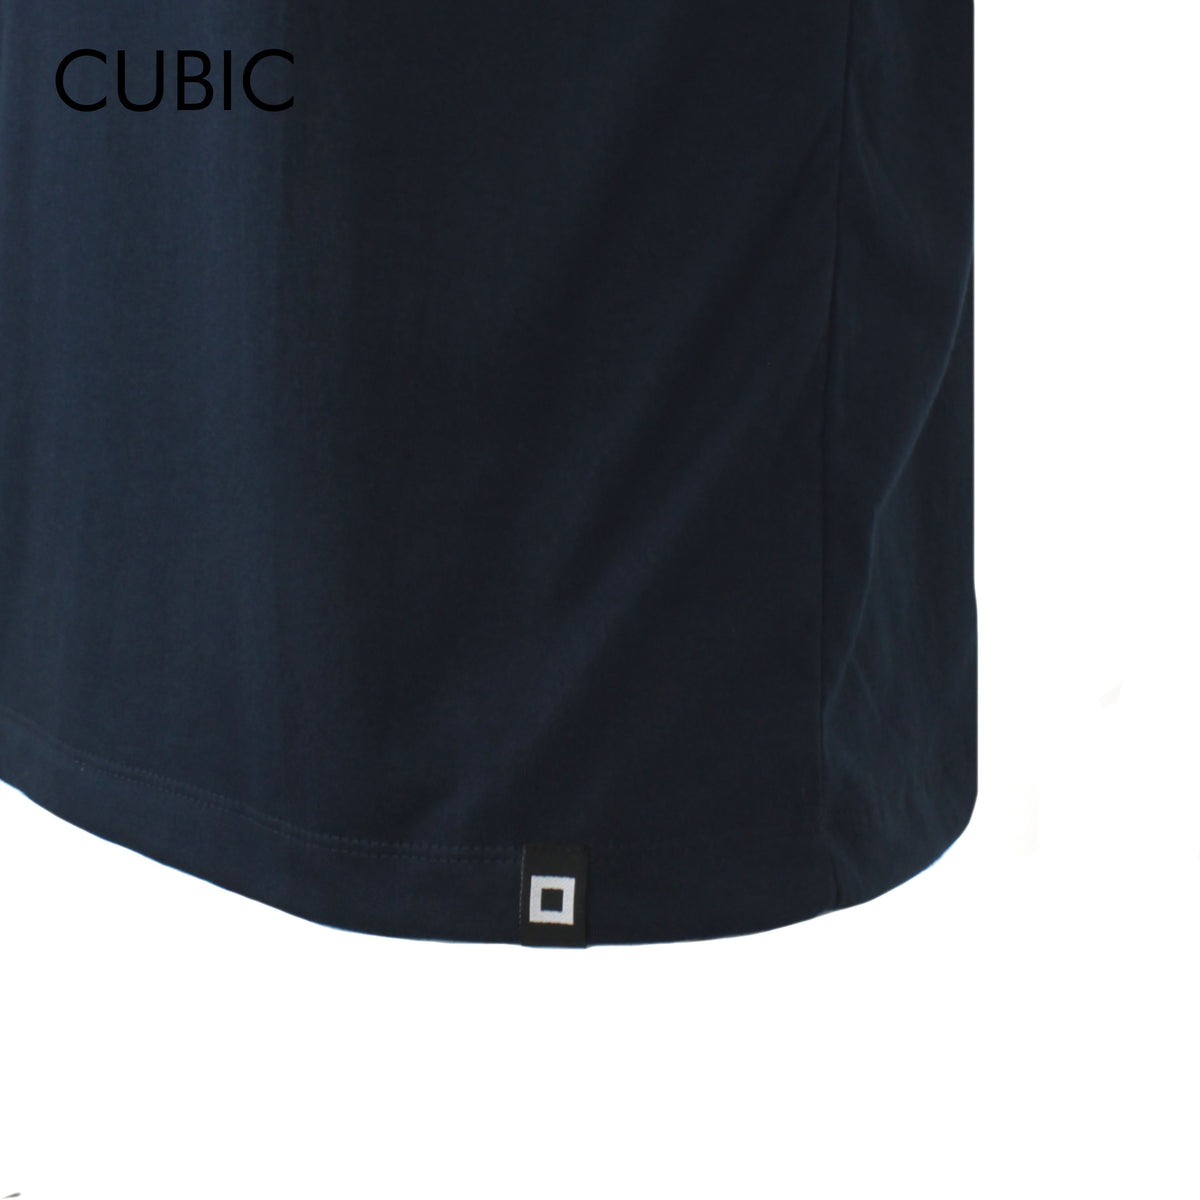 Cubic Mens Round Neck Tees T-Shirt Plain Shirt Top Top for Men - CMJ2344R